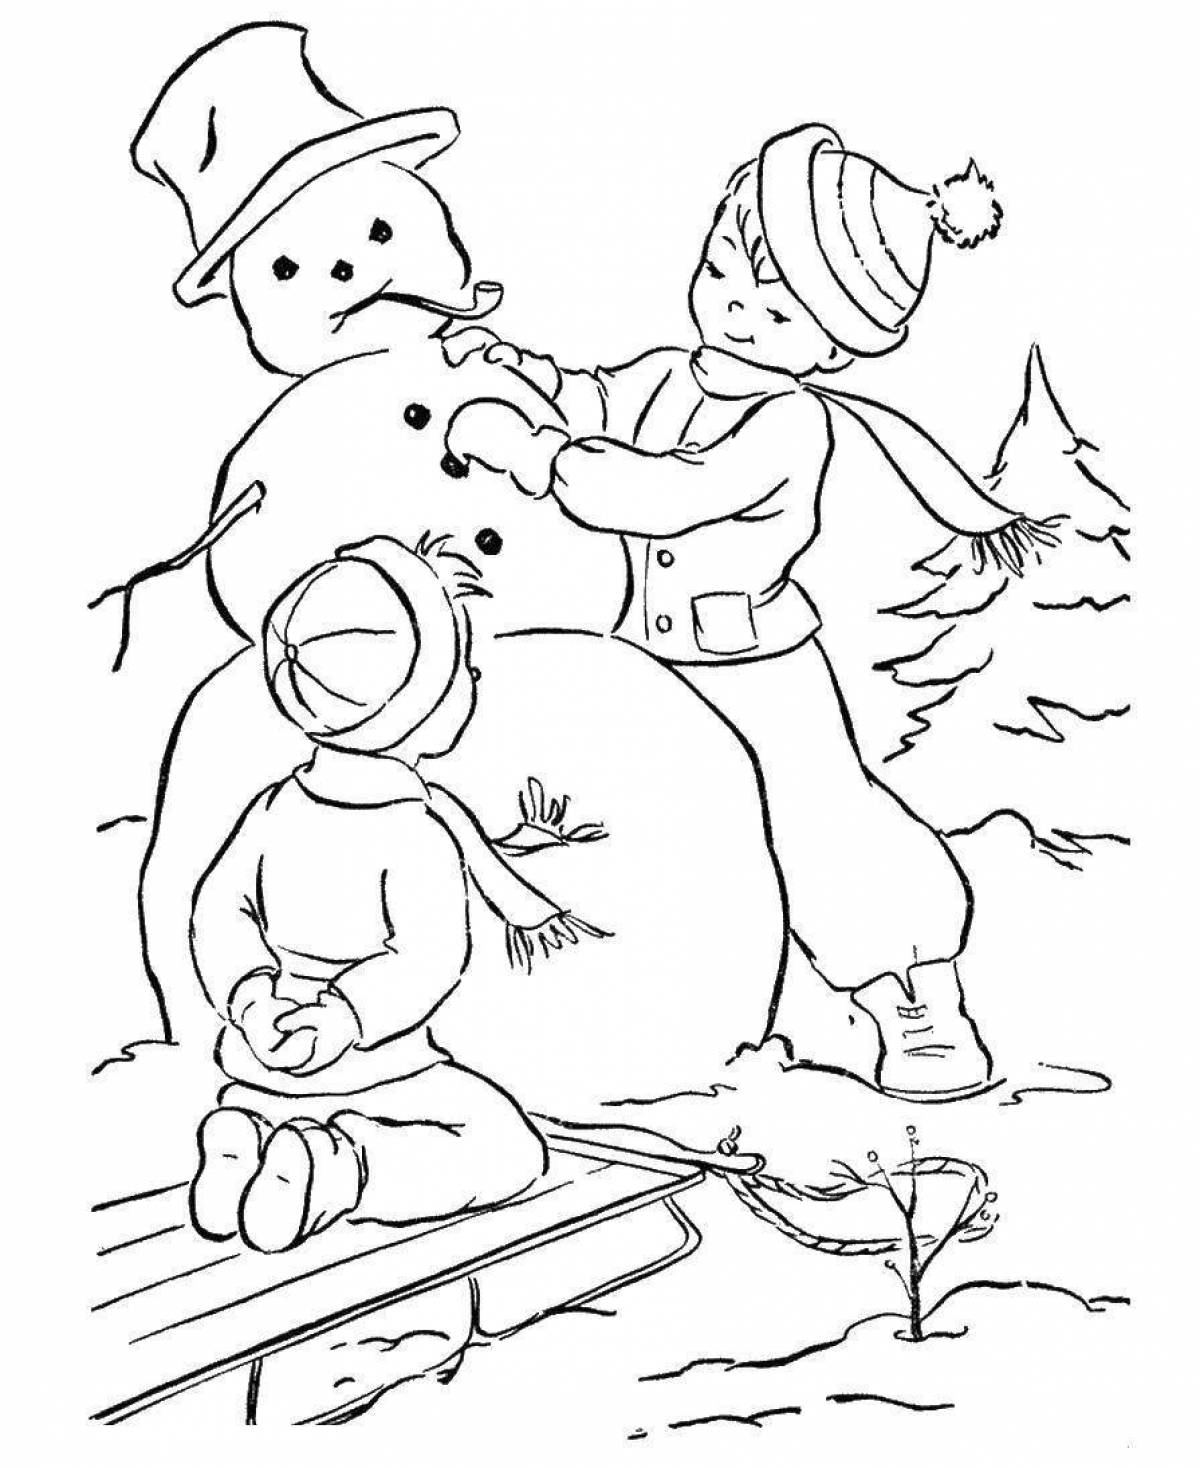 Adorable coloring book kids make a snowman